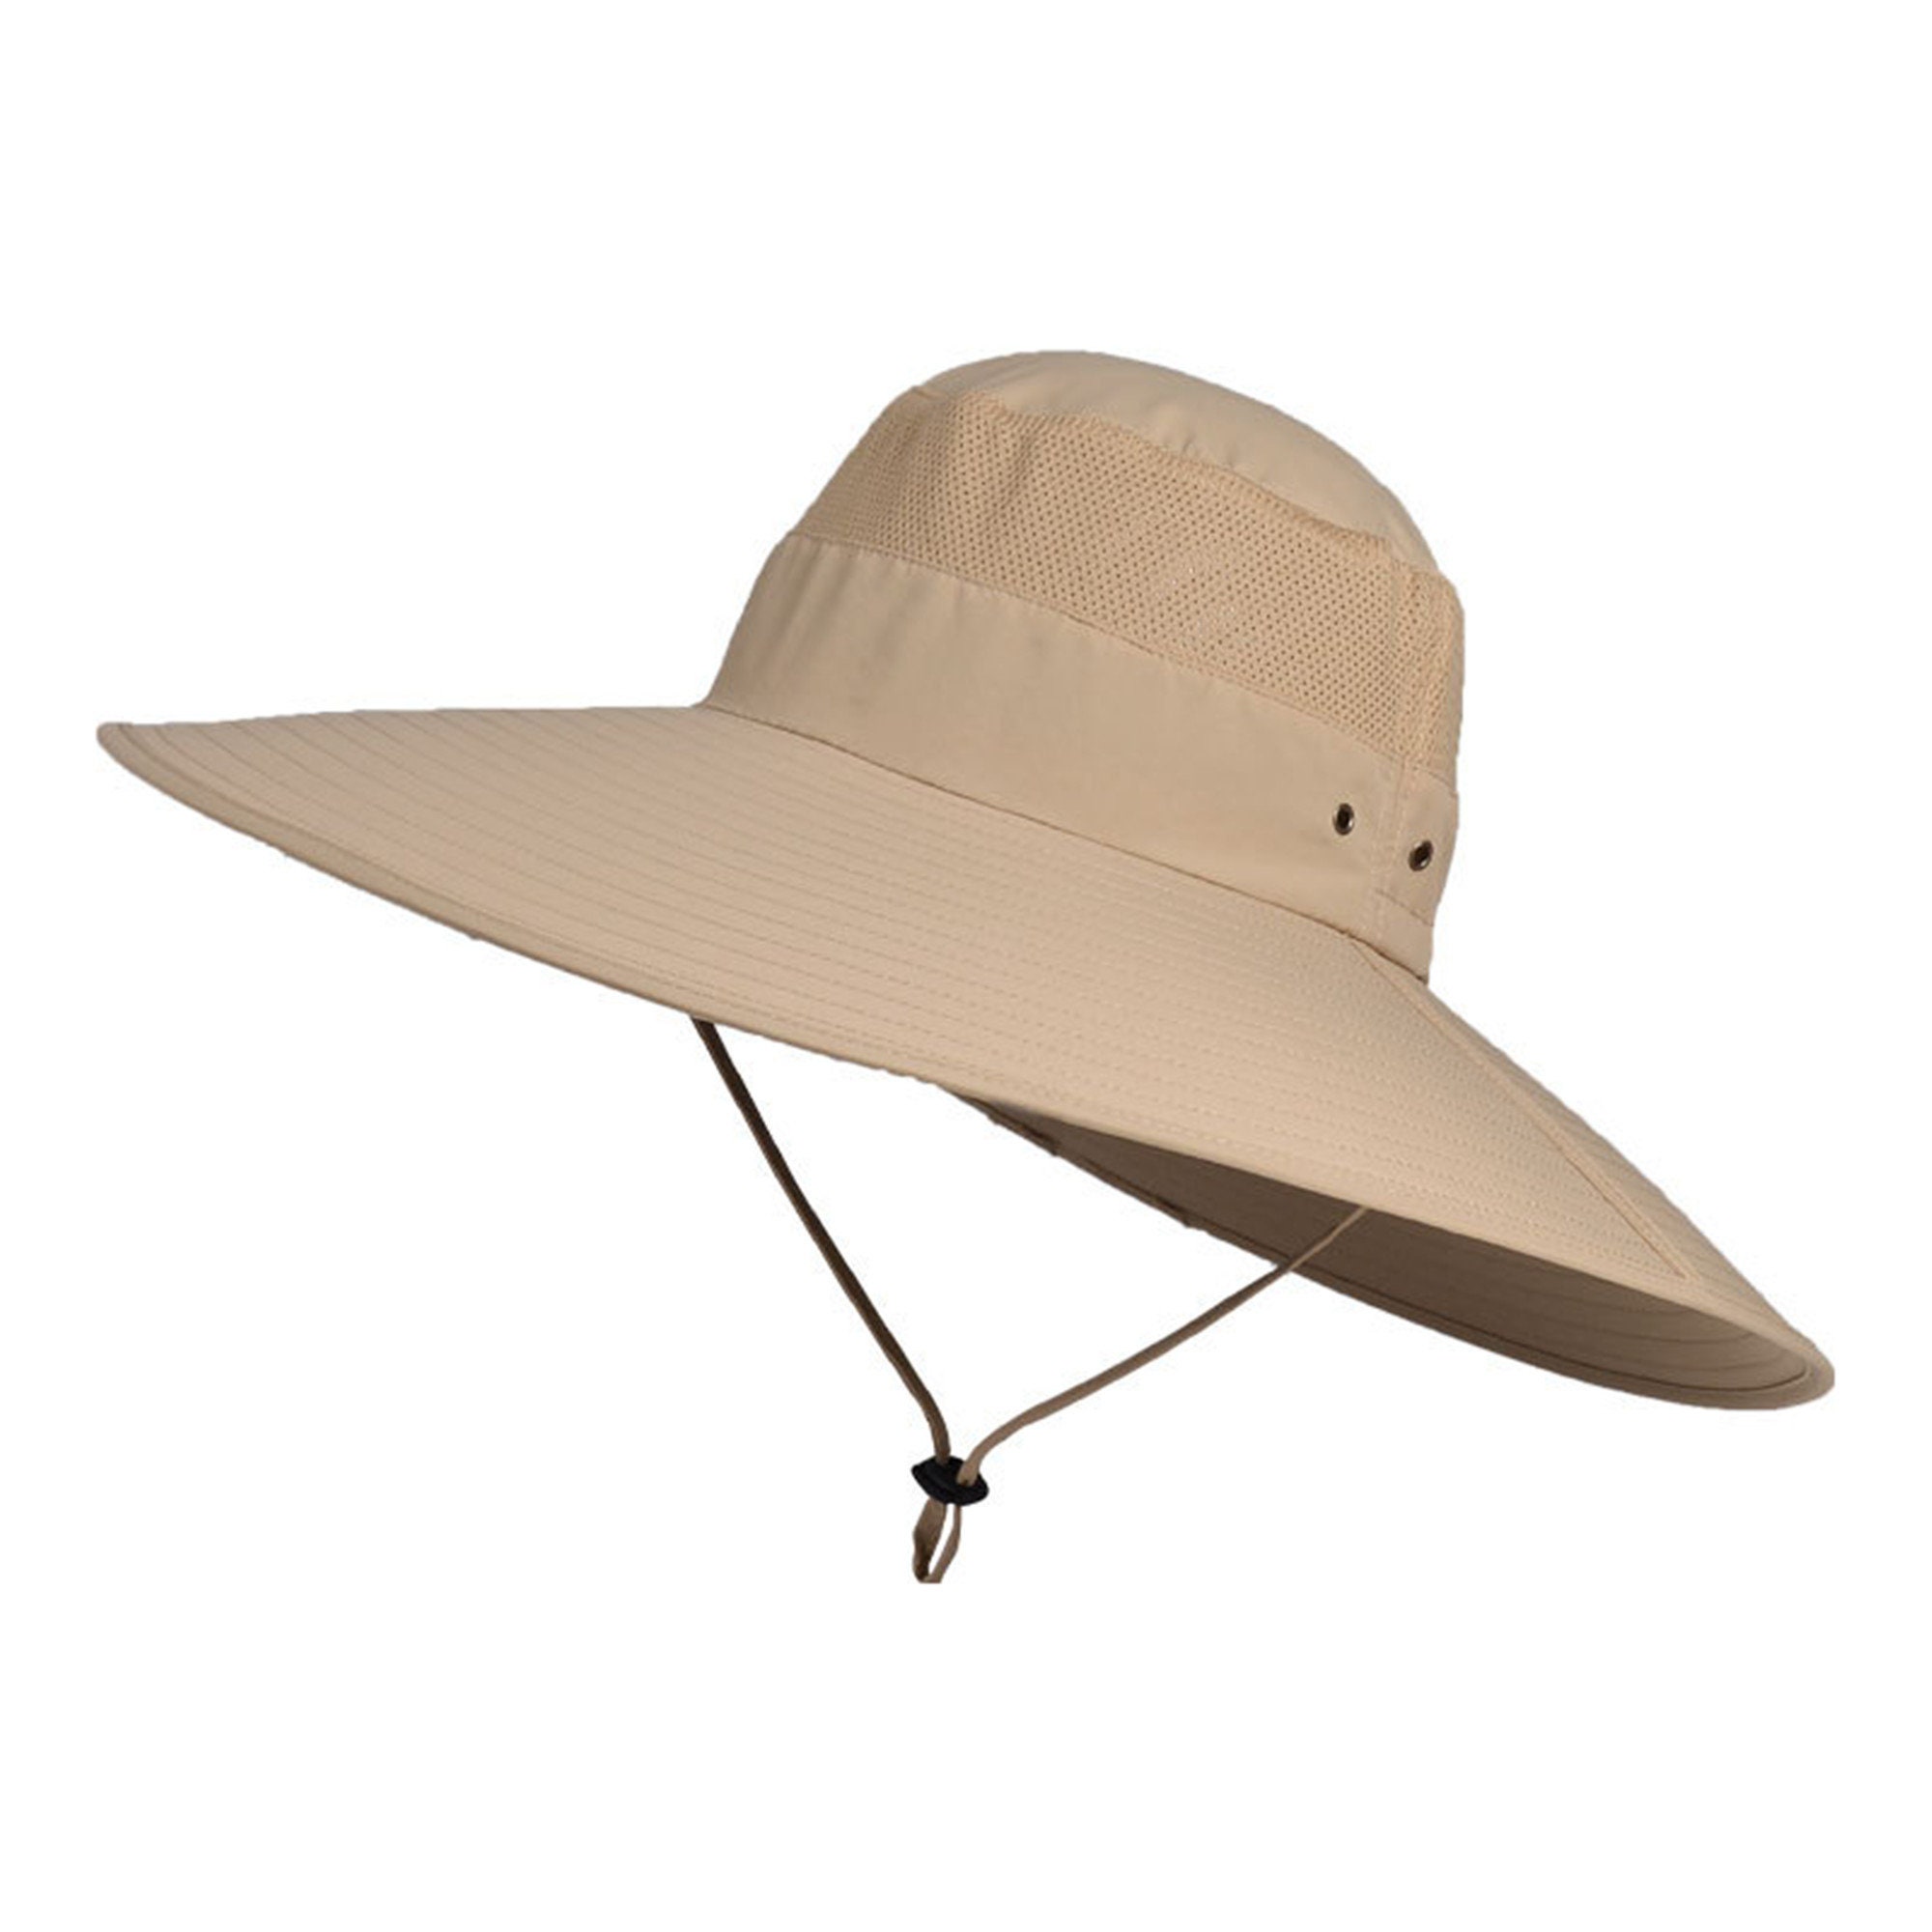  HLLMAN Super Wide Brim Sun Hat-UPF 50+ Protection,Mens